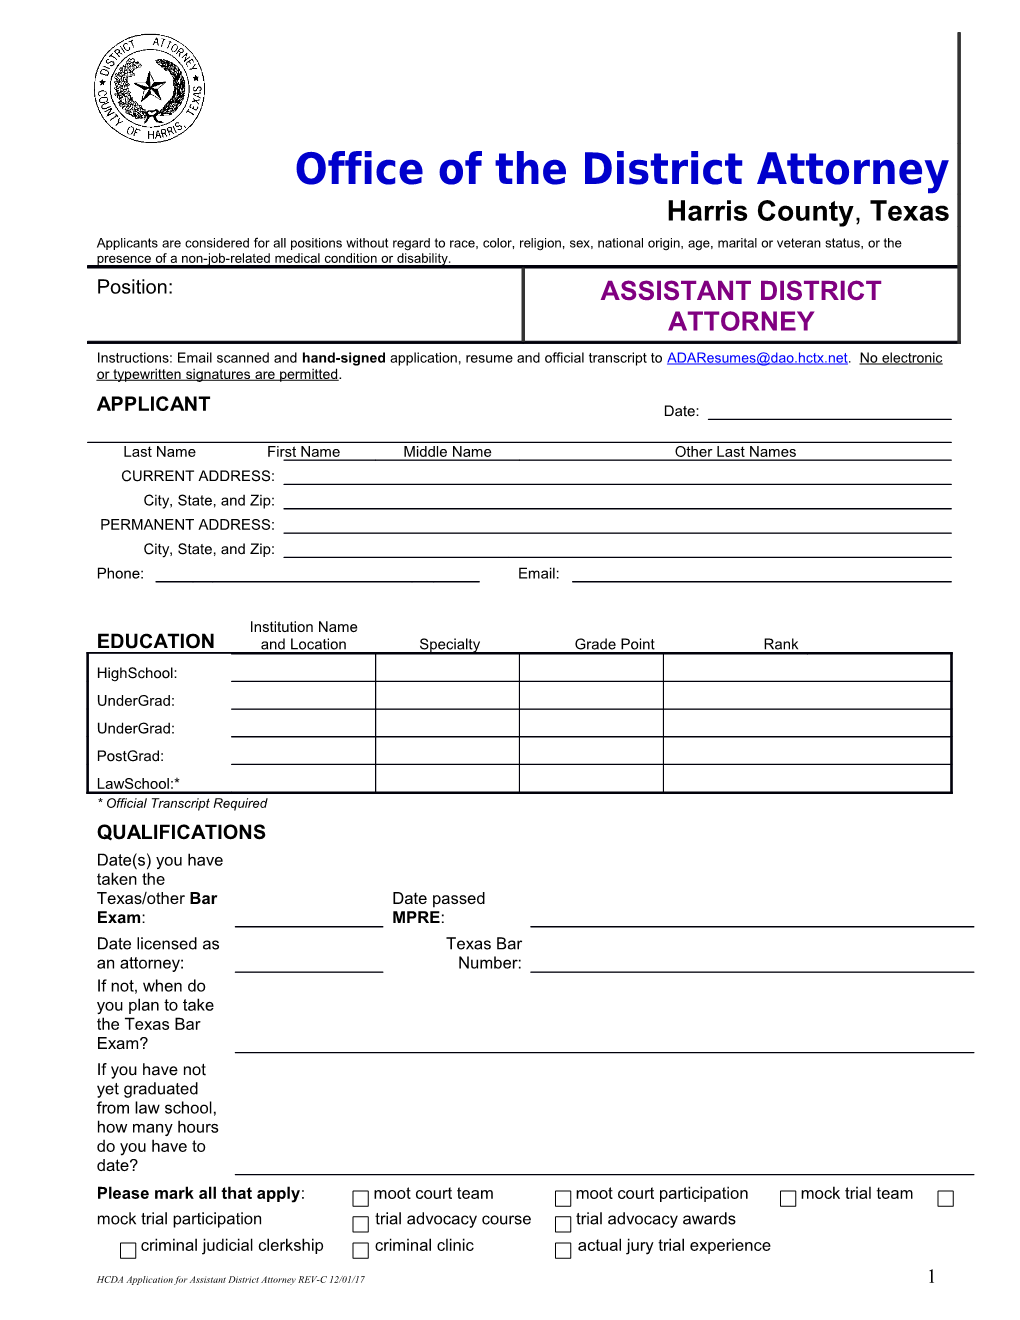 HCDA Application for Assistant District Attorney REV-C 12/01/17 1